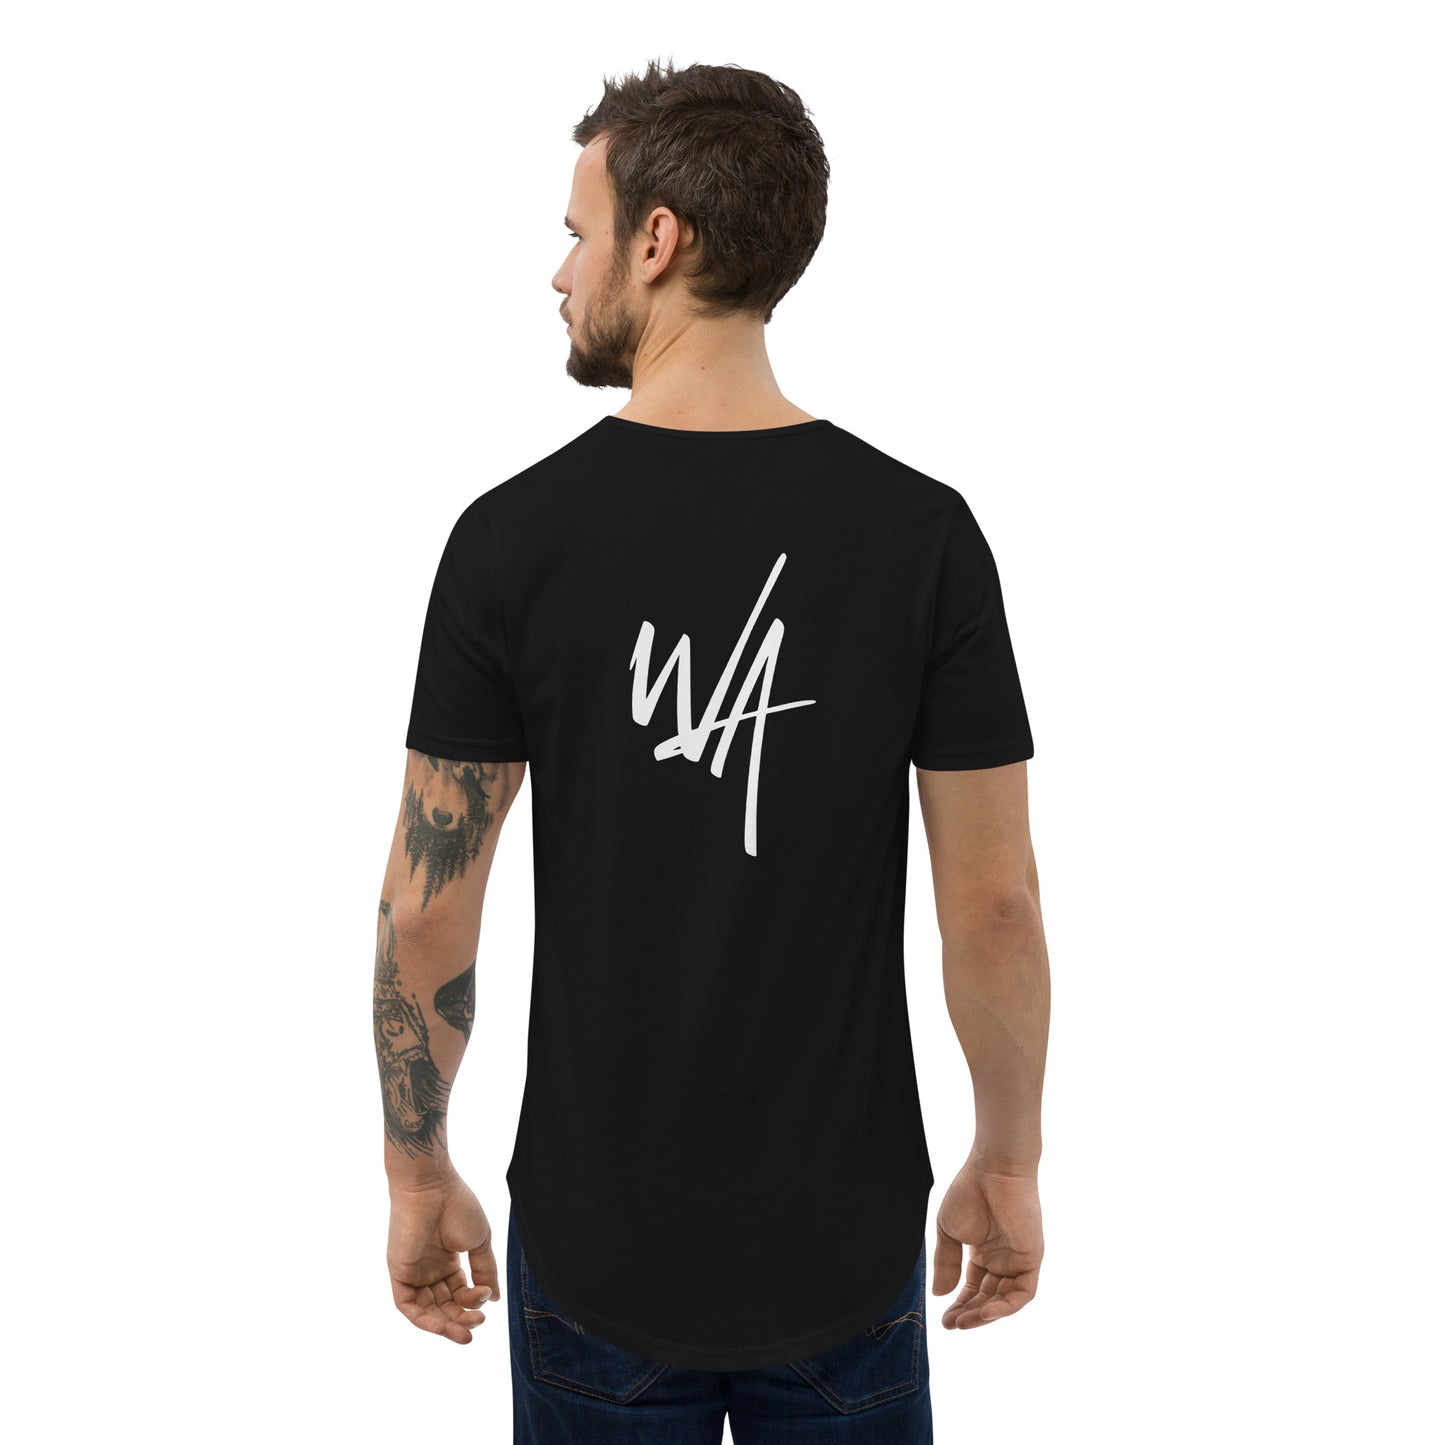 W/A Men's Curved Hem T-Shirt